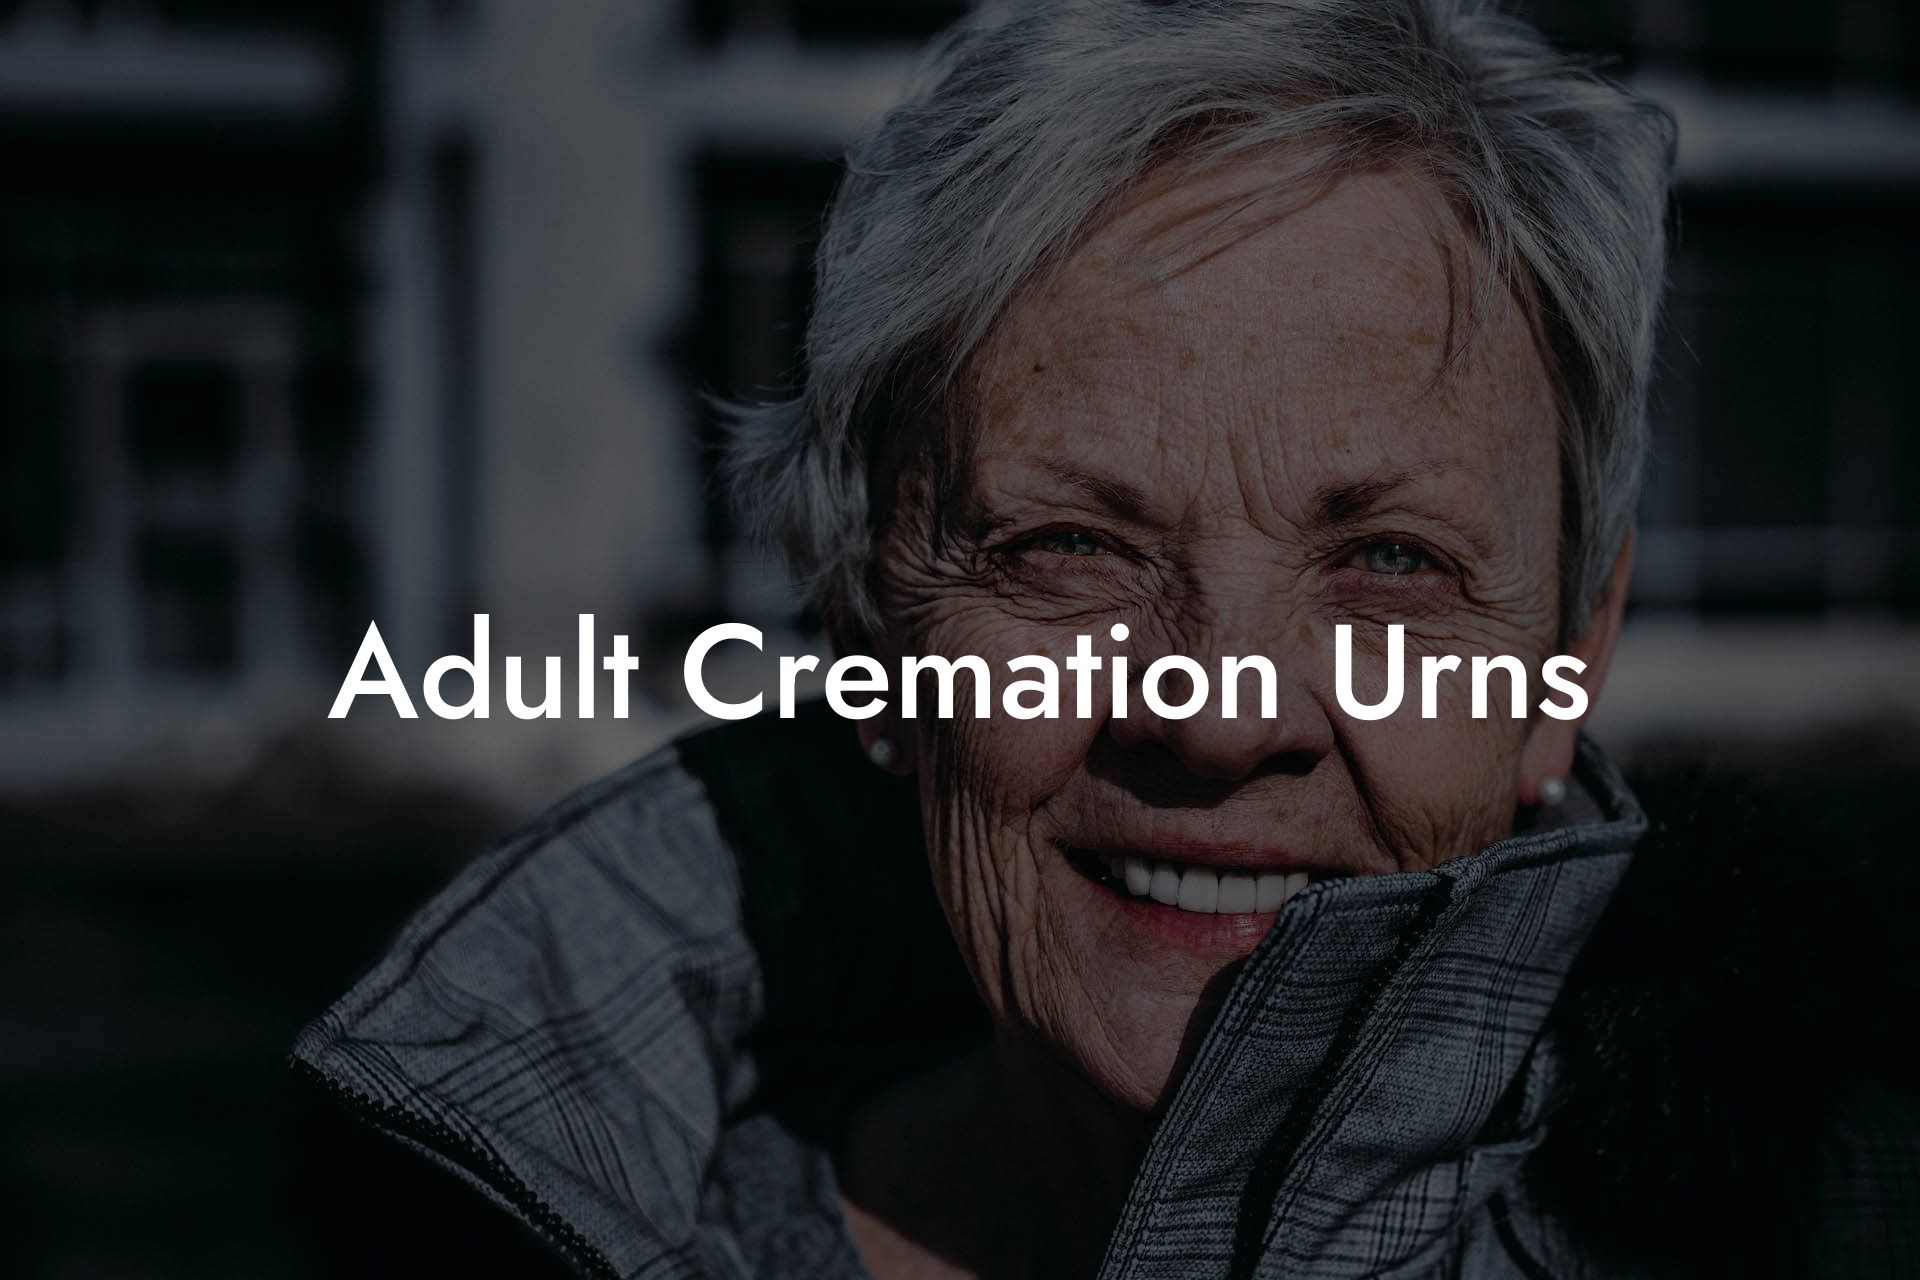 Adult Cremation Urns